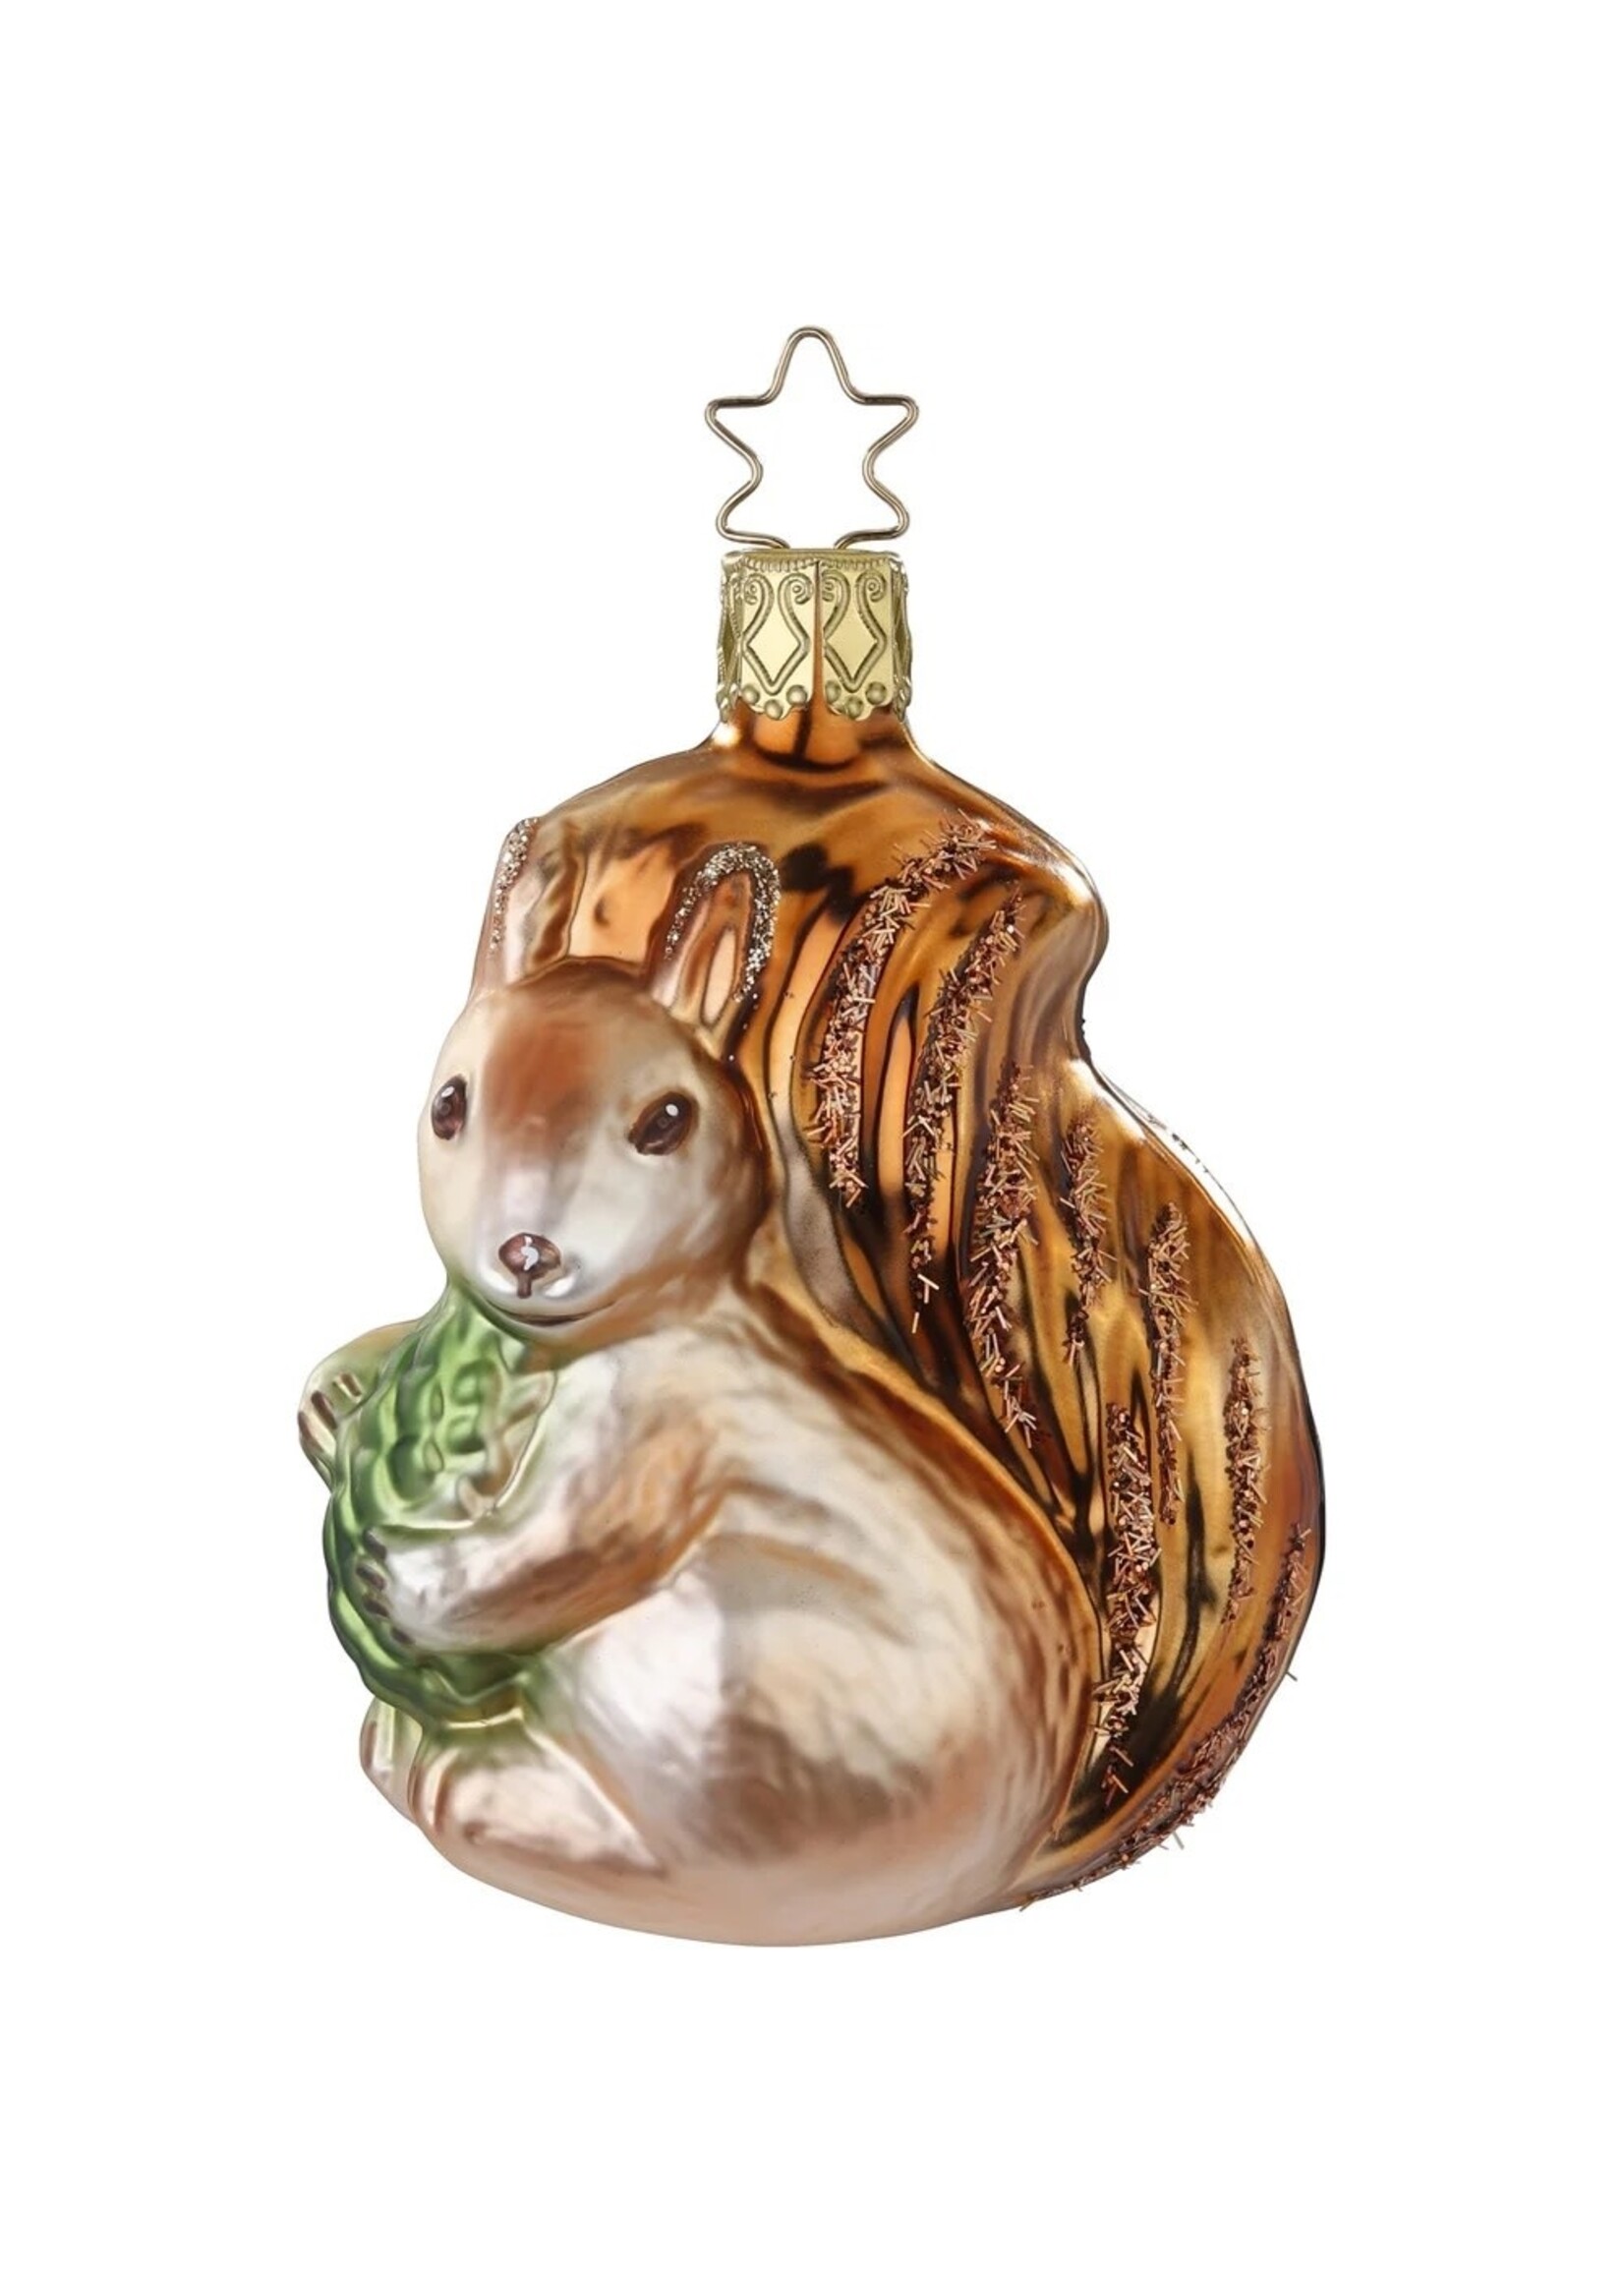 Ornament - Squirrel